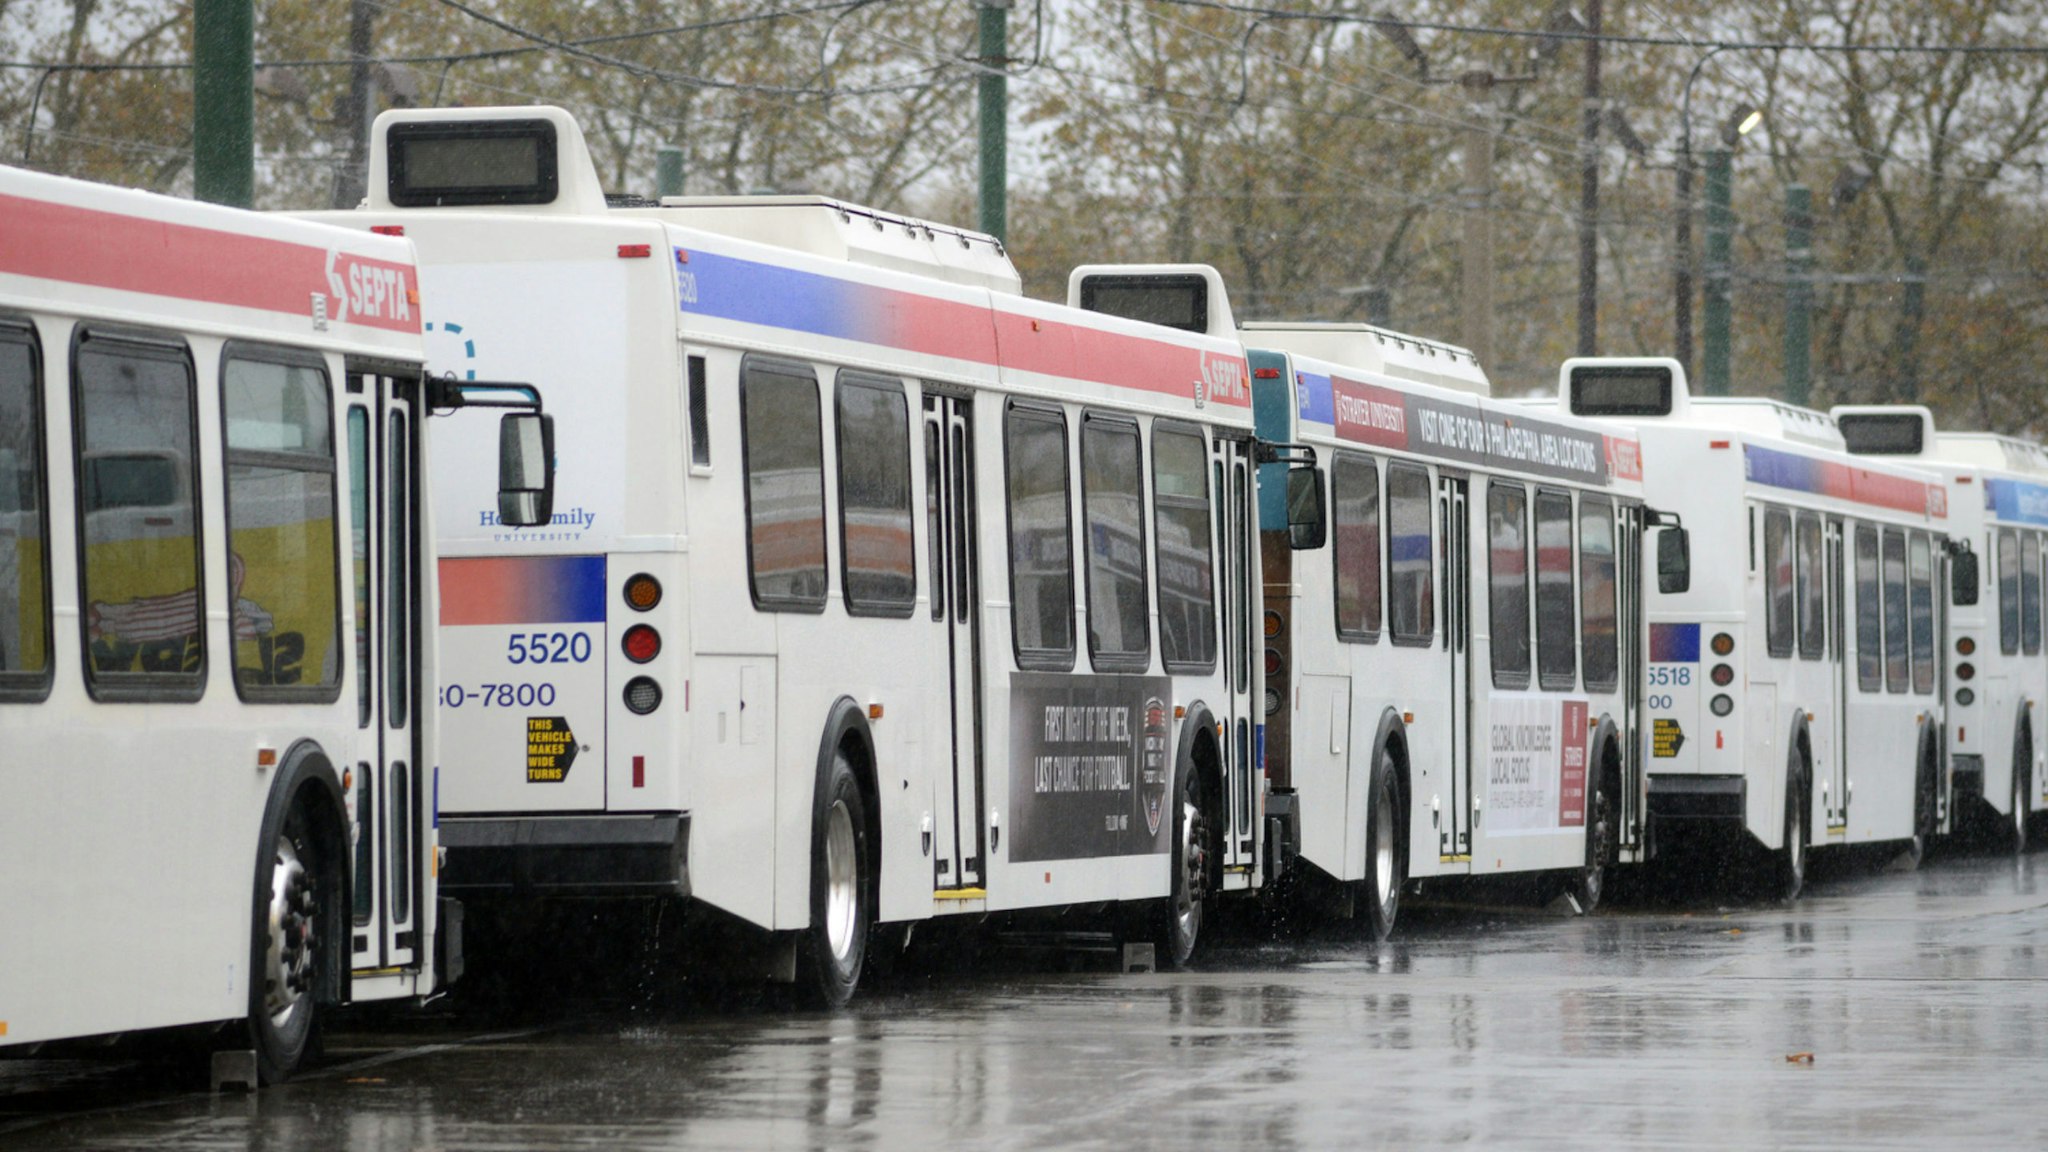 SEPTA (Southeastern Pennsylvania Transit Authority) buses at Frankford terminal remain idle as Hurricane Sandy approaches October 29, 2012 in Philadelphia, Pennsylvania.